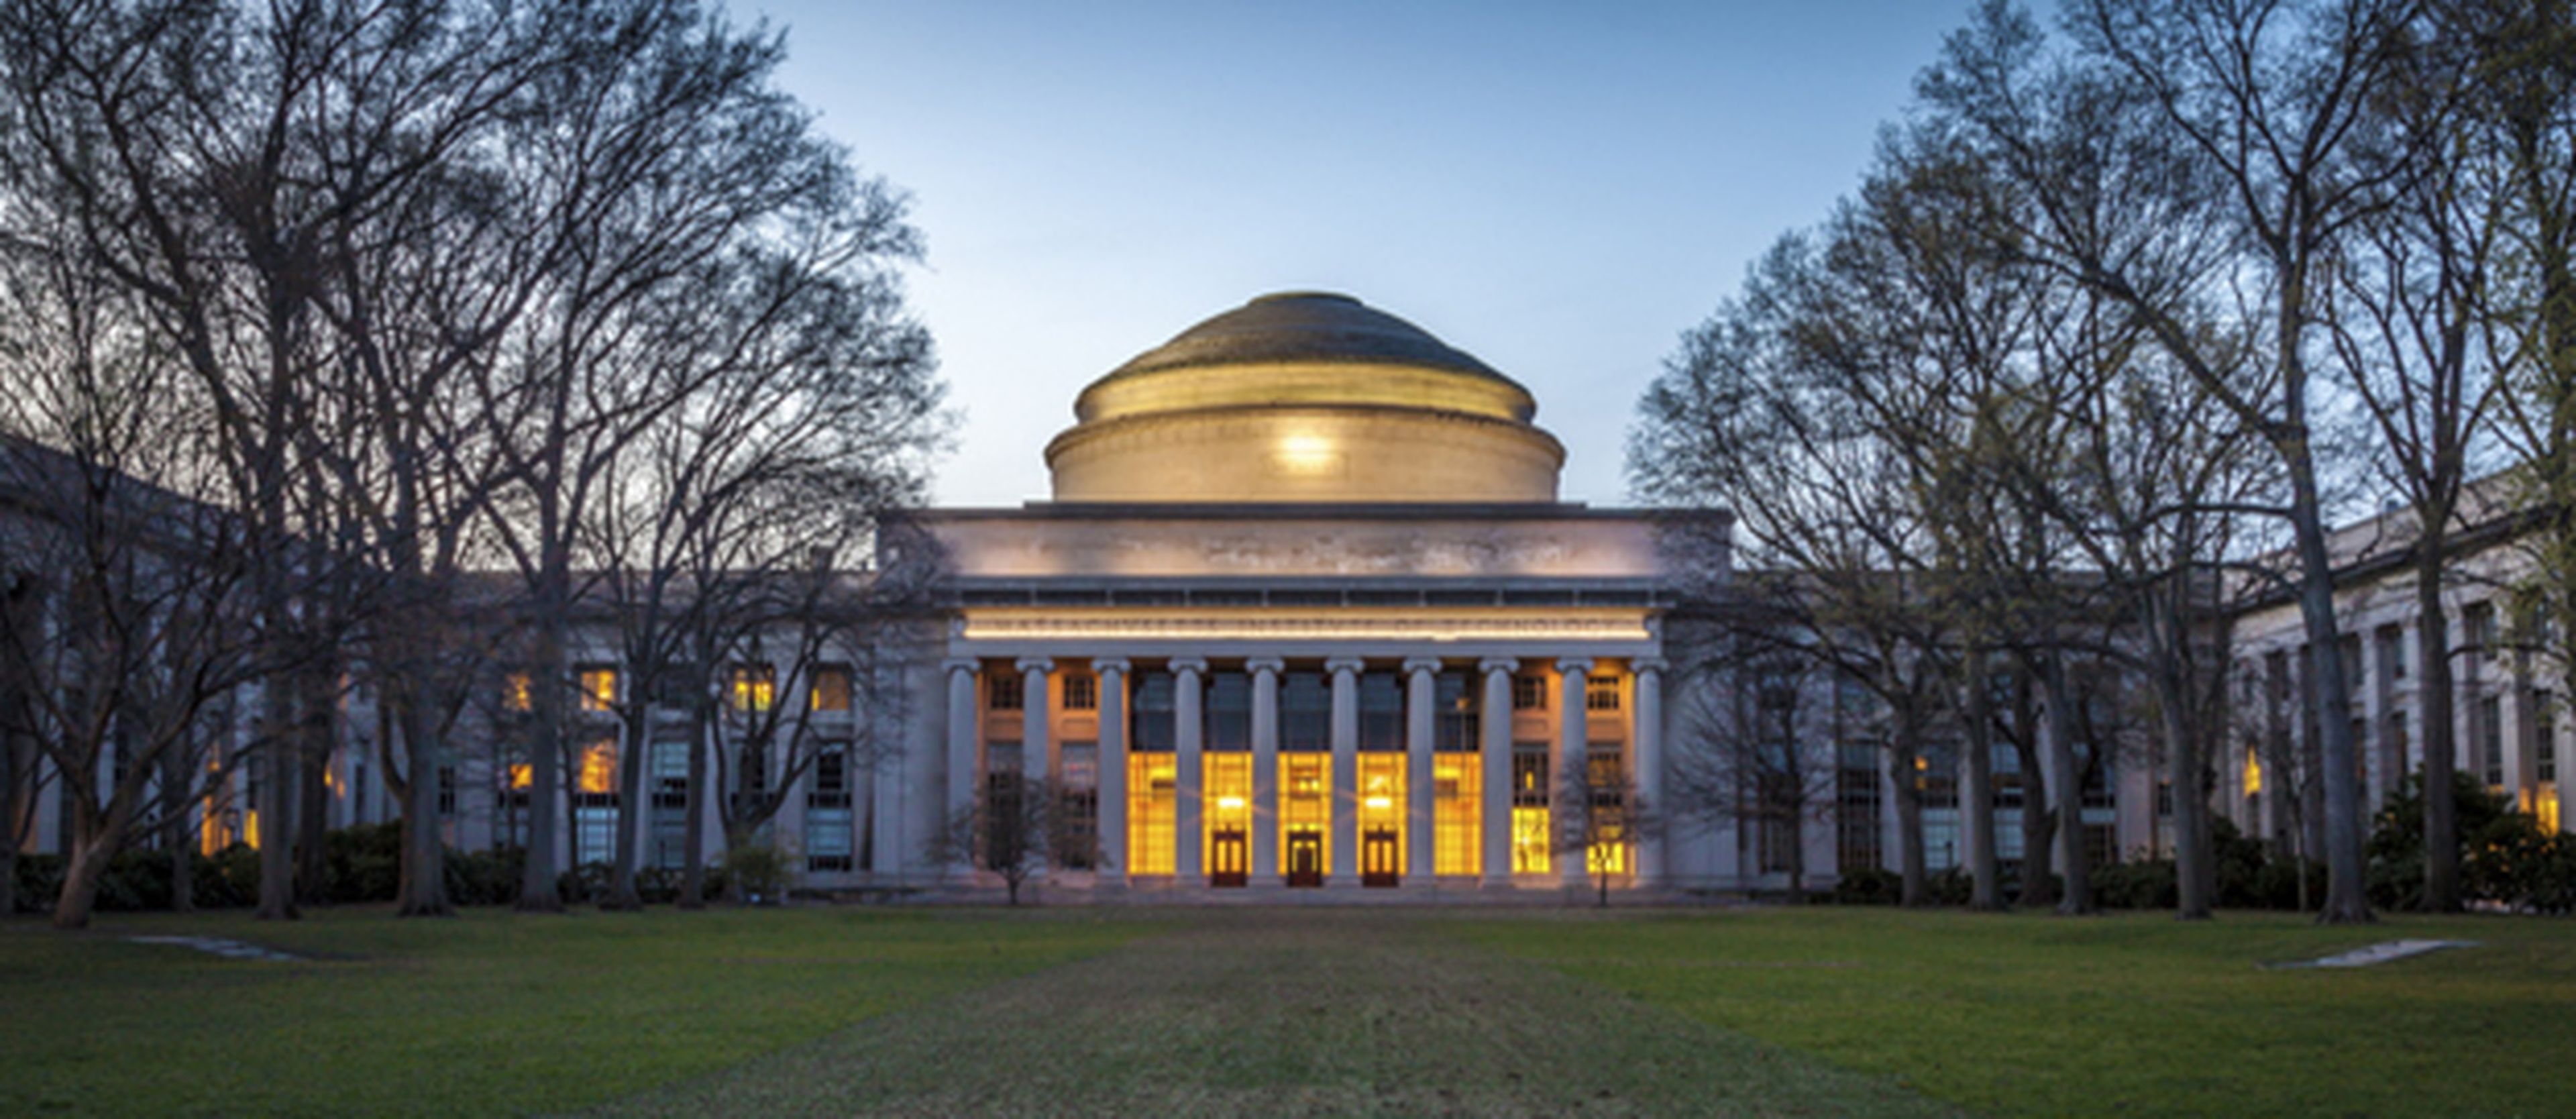 Instituto de tecnología de Massachusetts